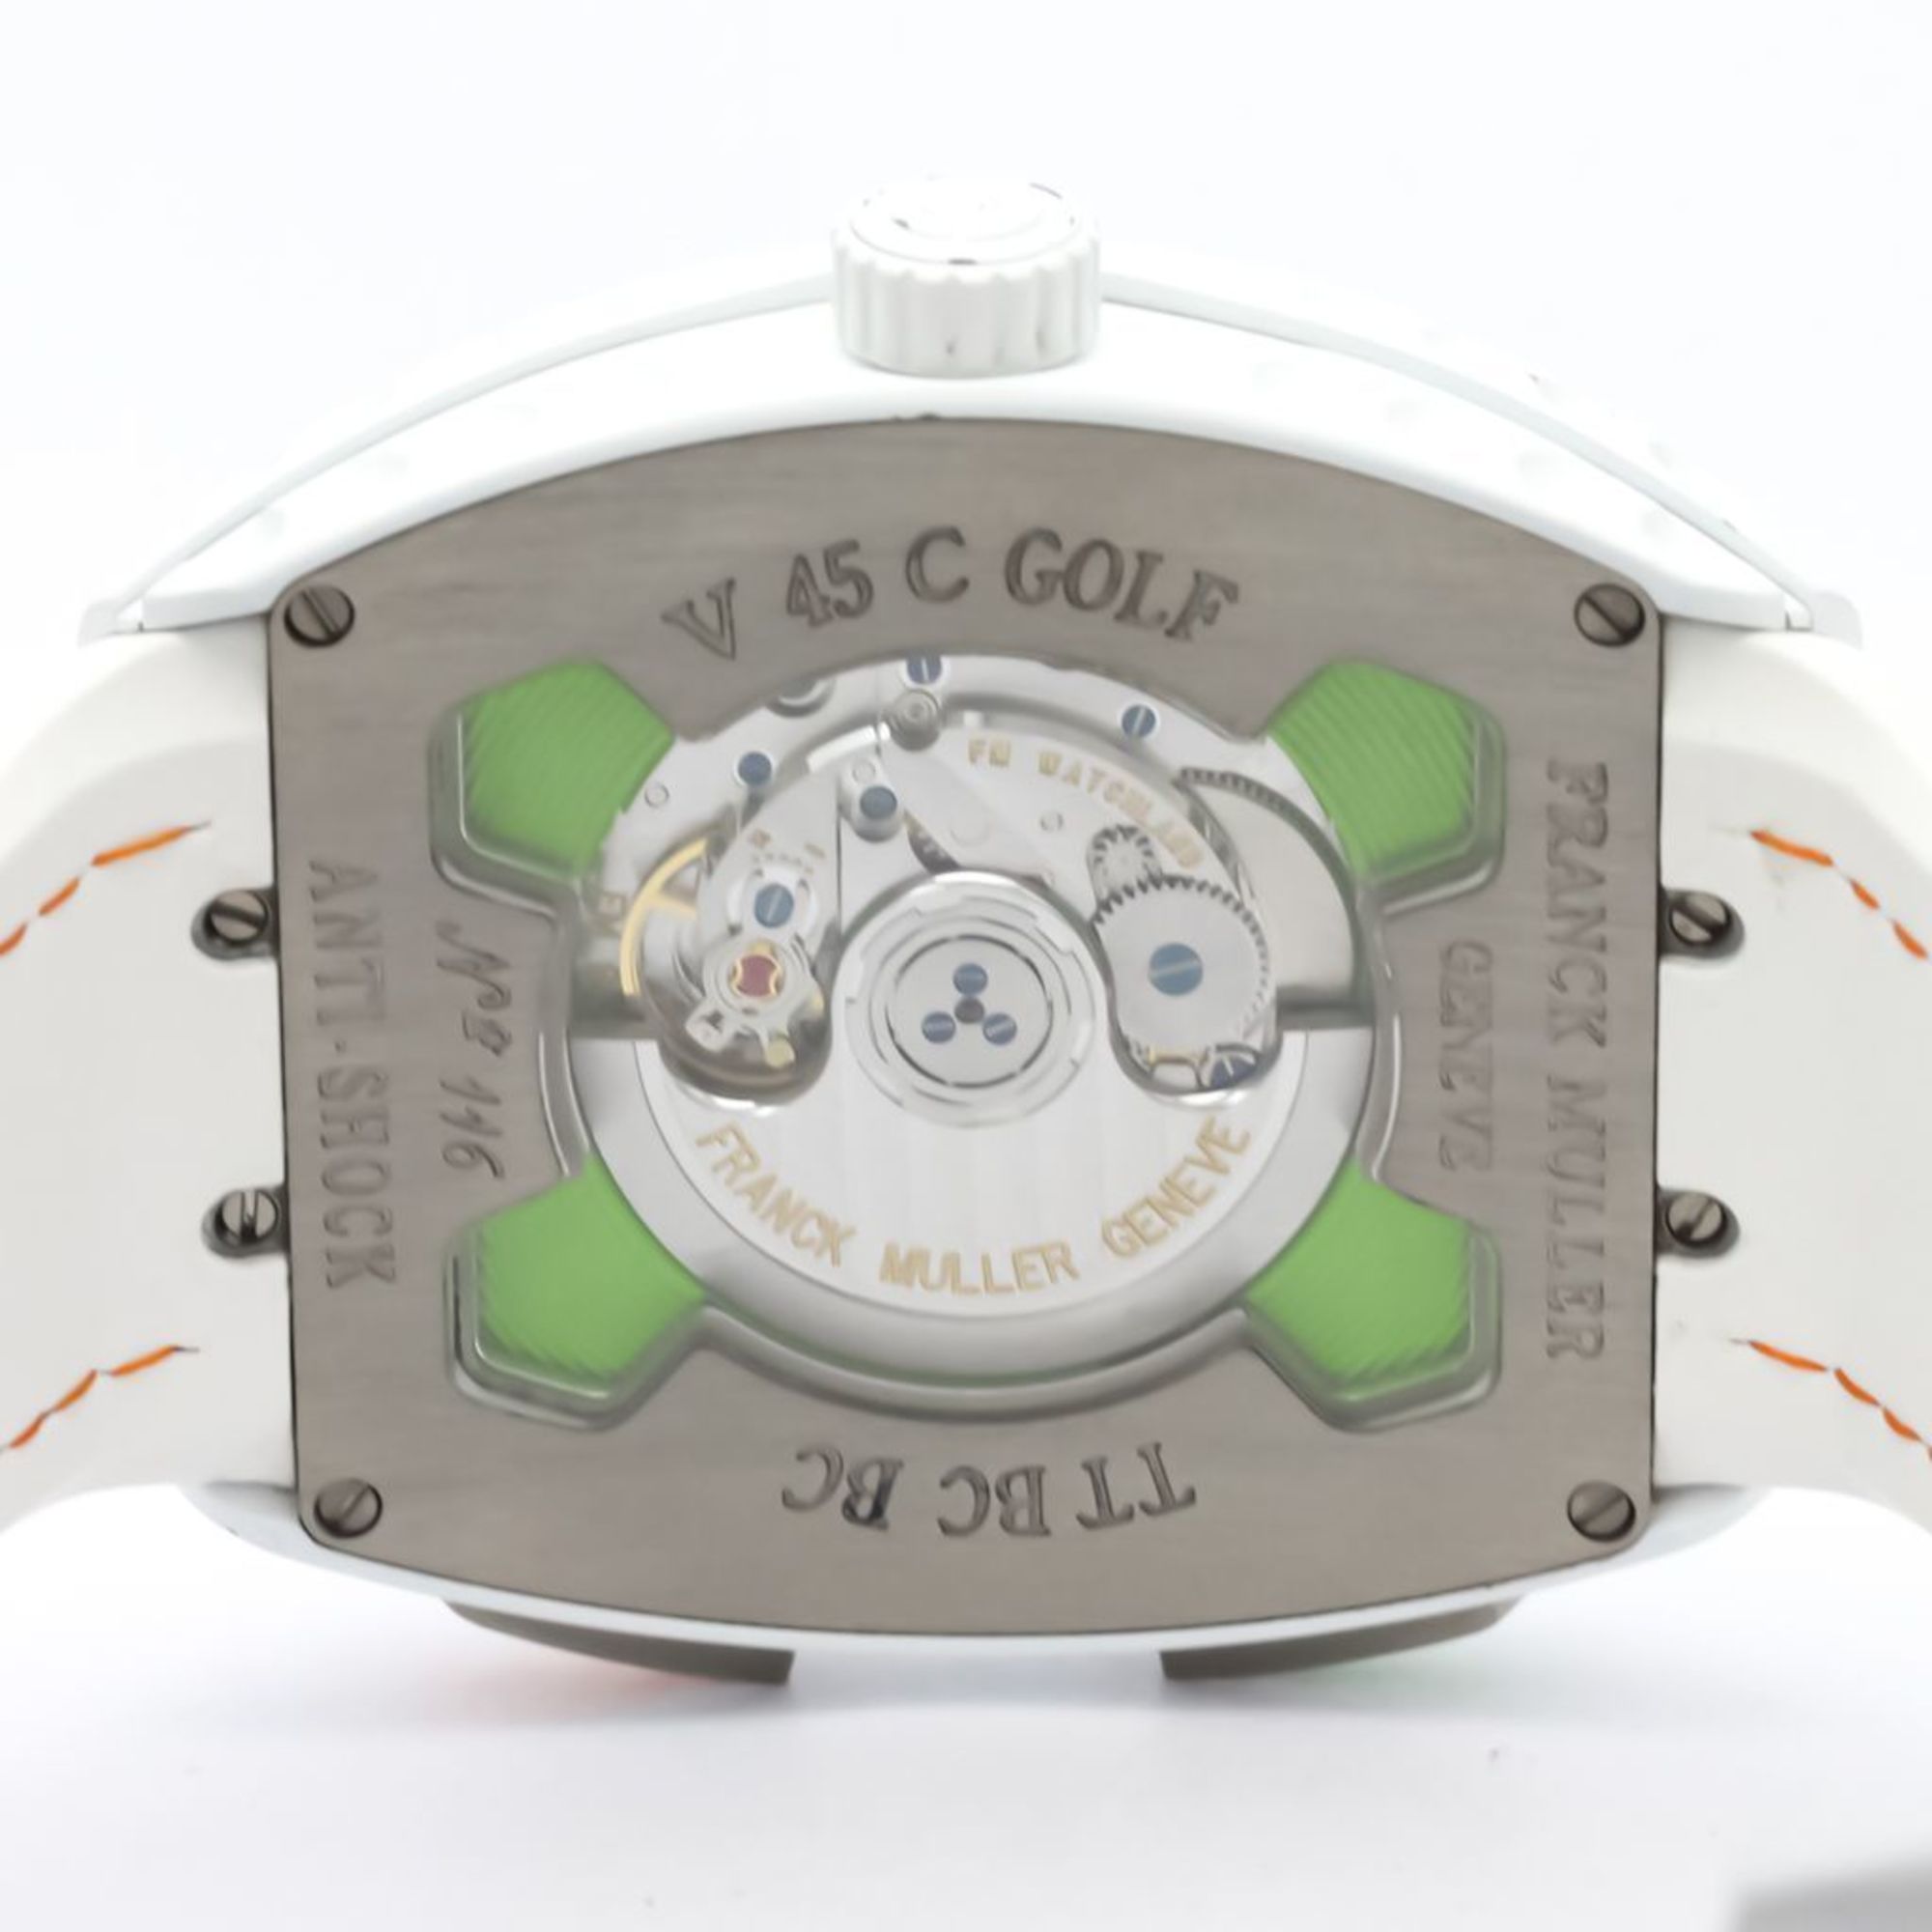 Franck Muller Vanguard Automatic Titanium Men's Sports Watch V45C GOLF